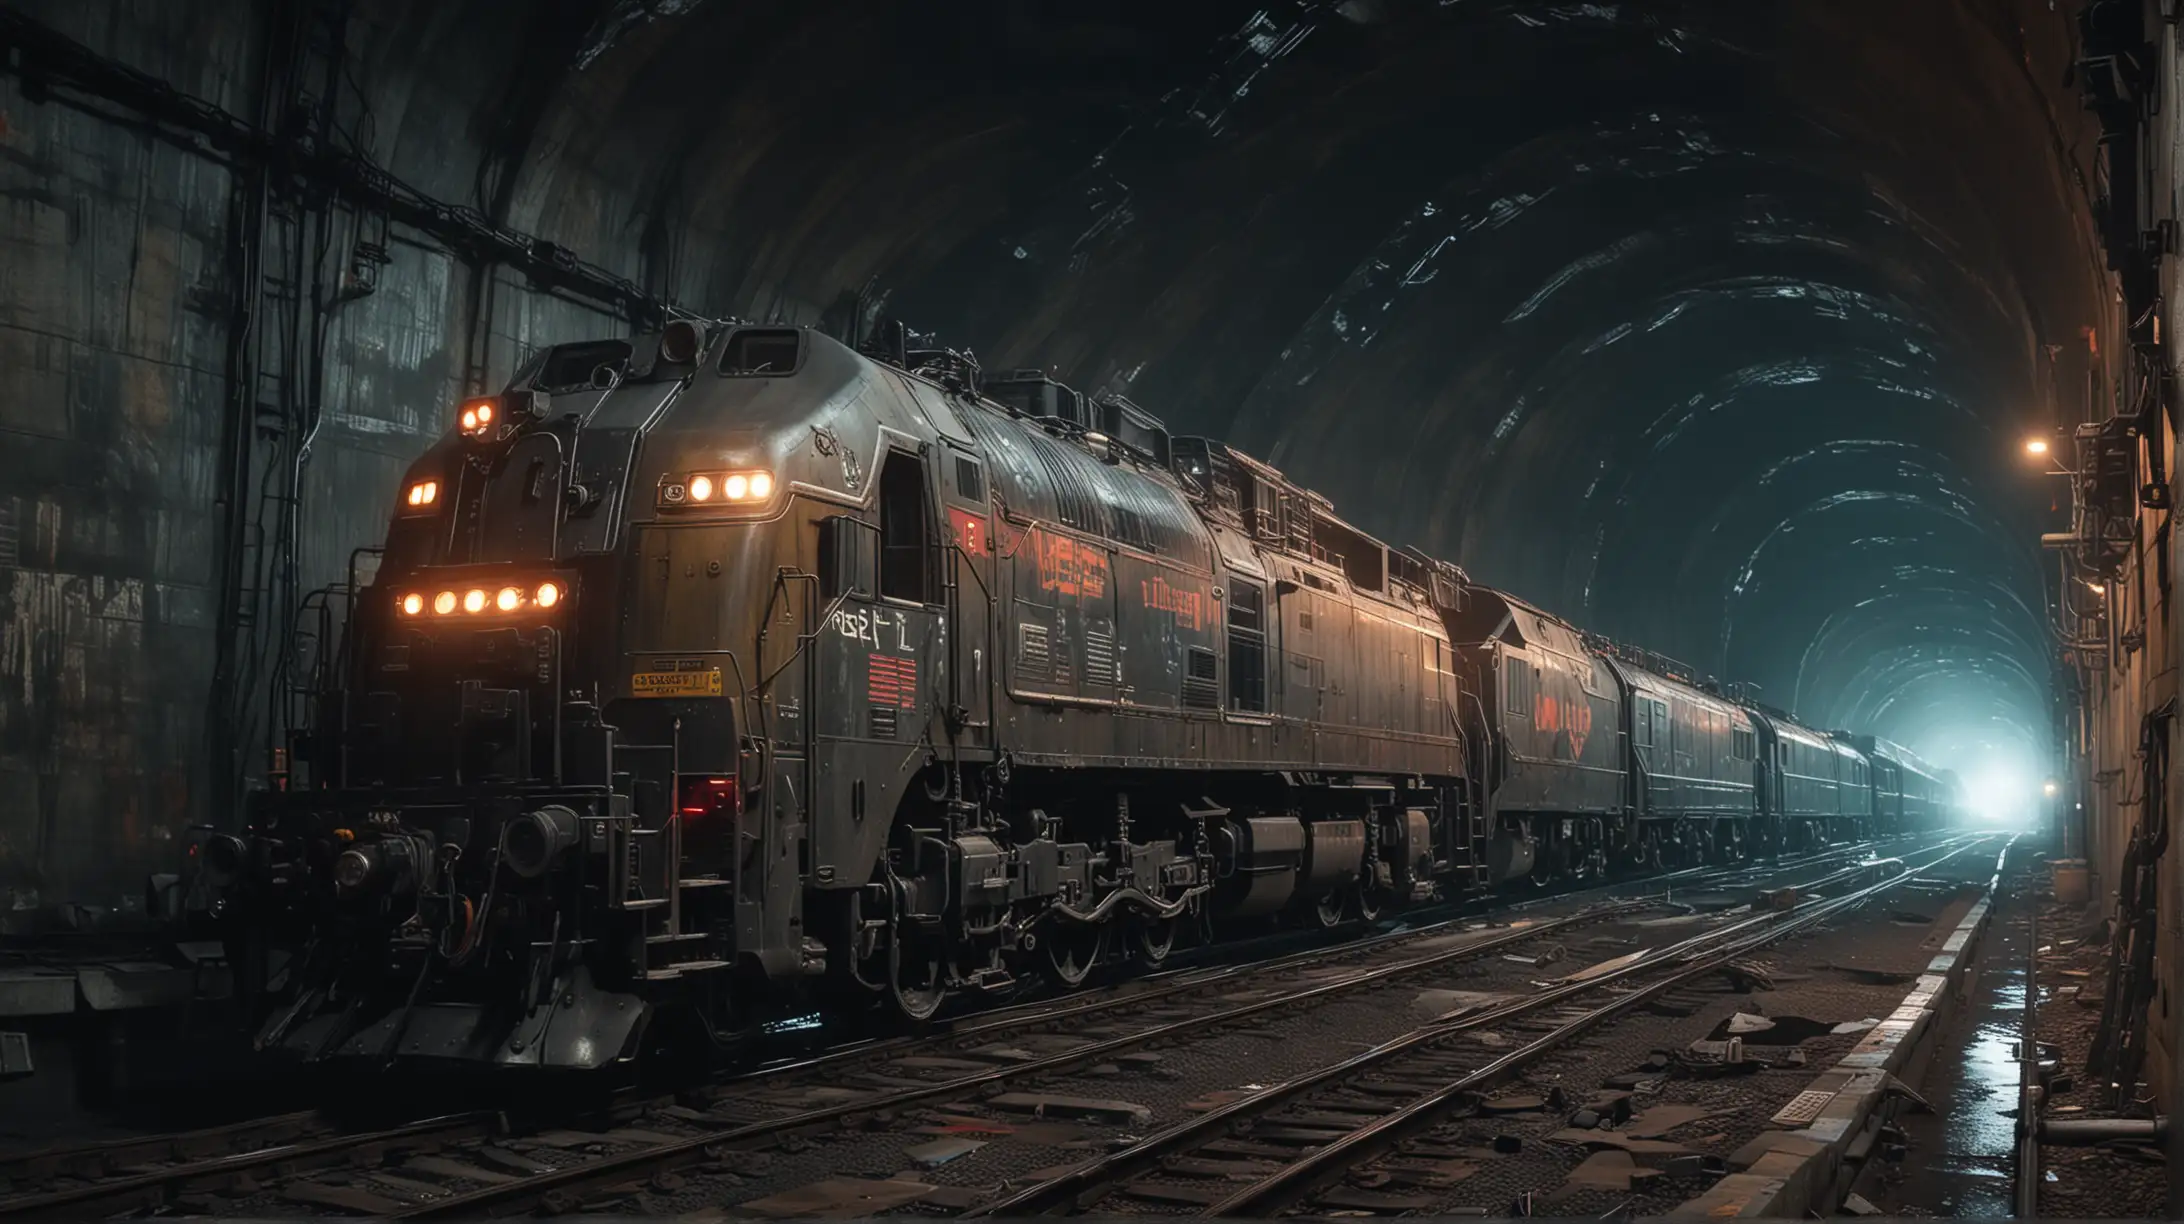 Cyberpunk Locomotive Racing Through Illuminated Tunnel